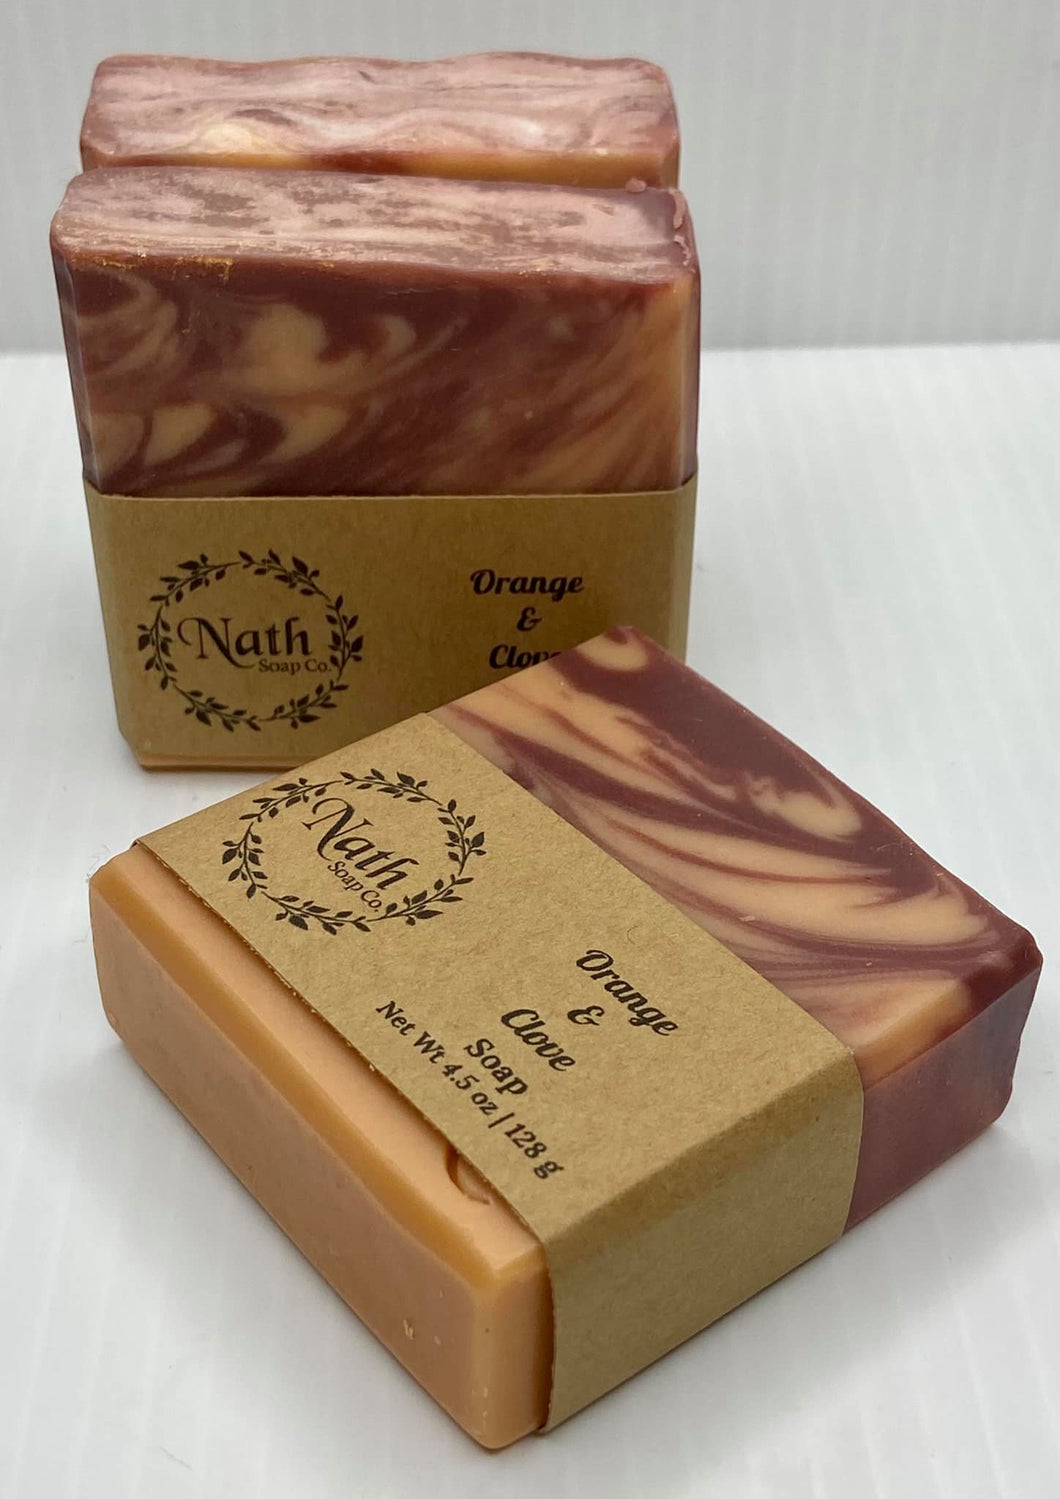 Orange & Clove Handcrafted Soap